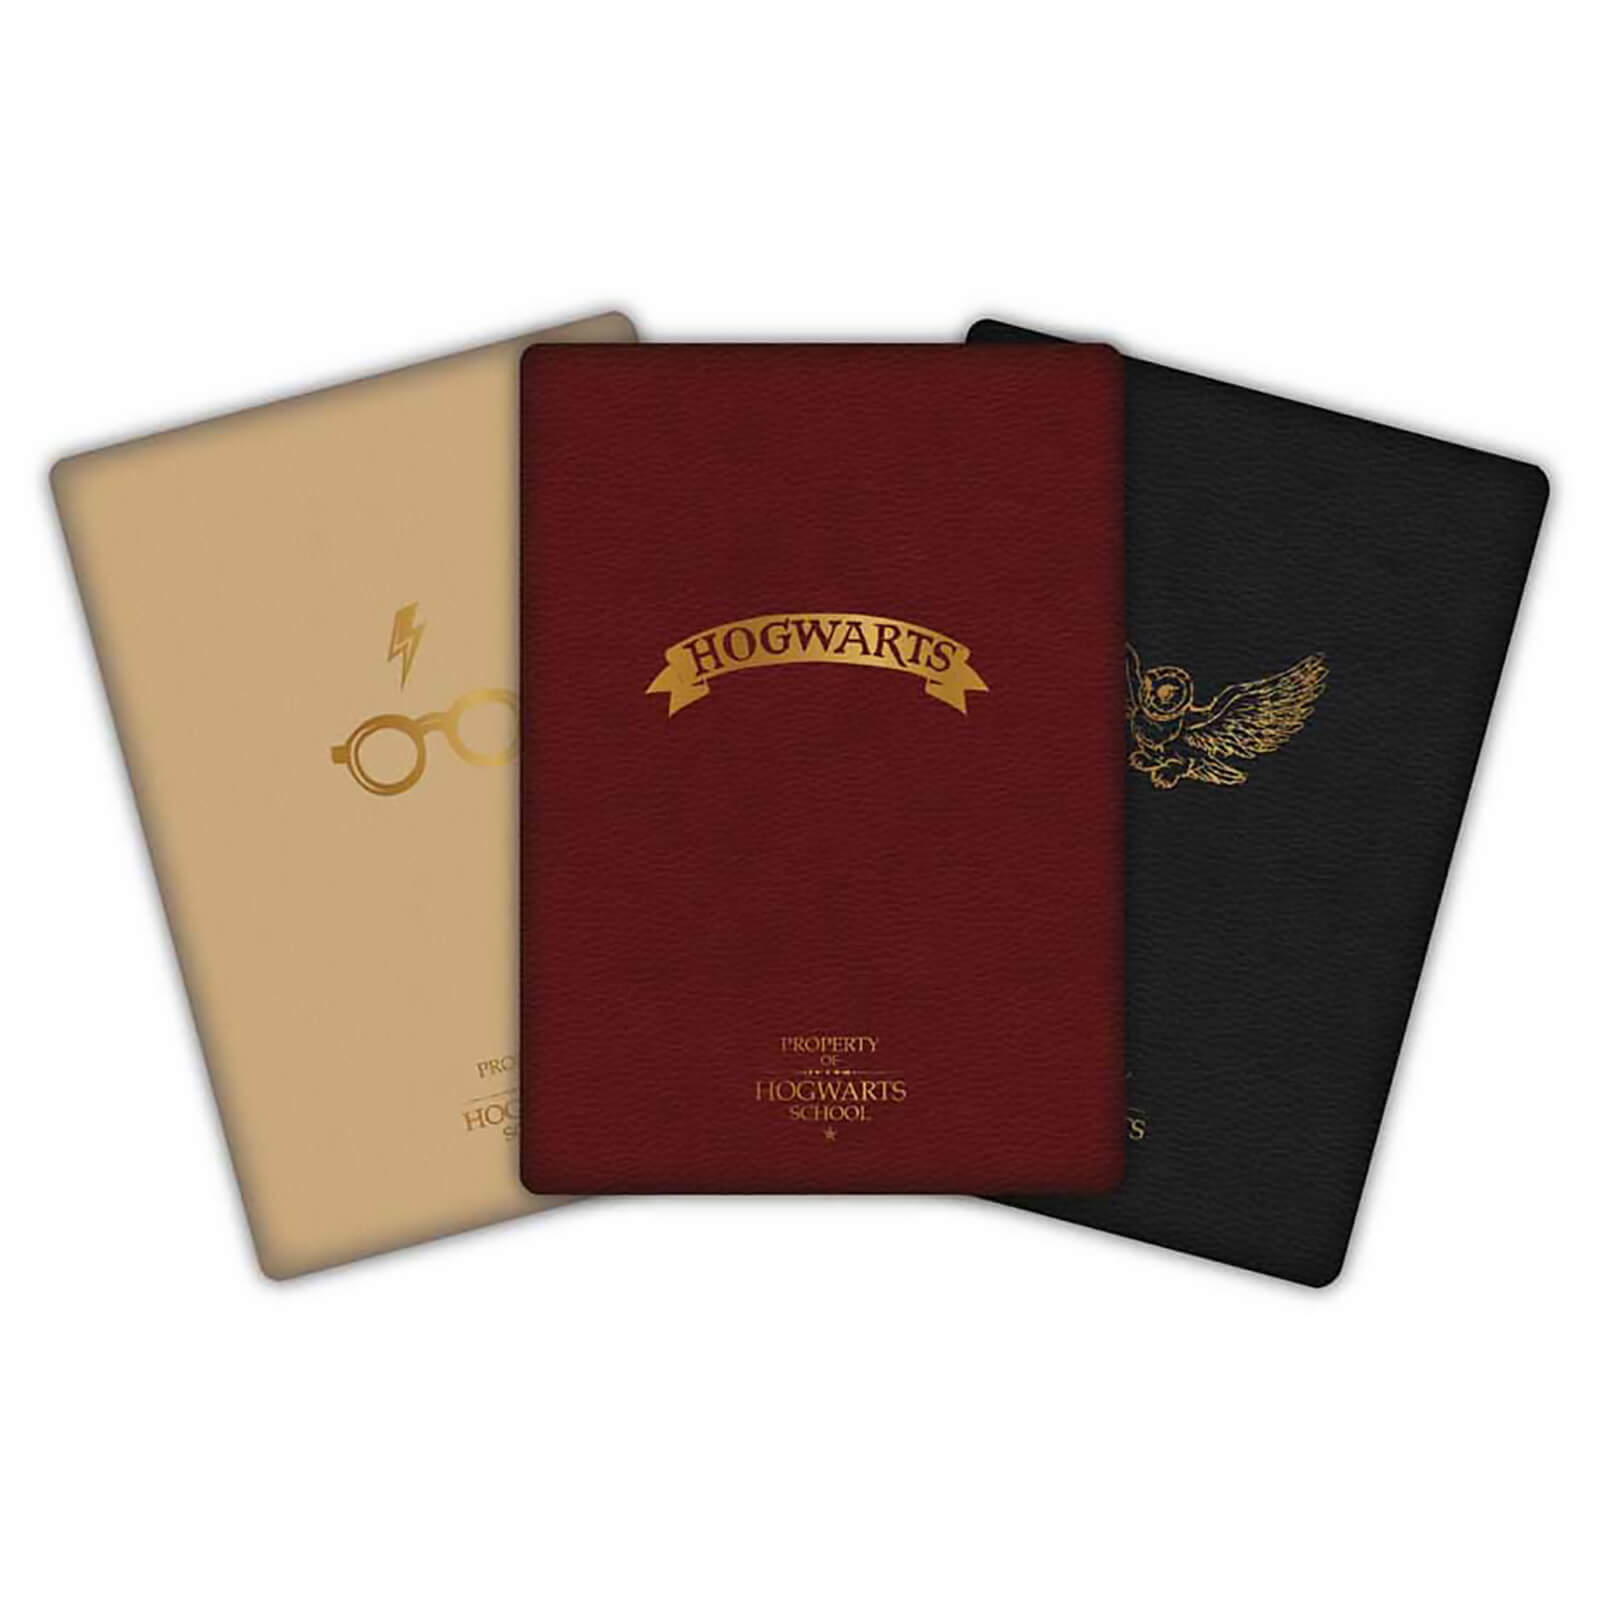 Harry Potter Officially Licensed MEGA Christmas Gift Set